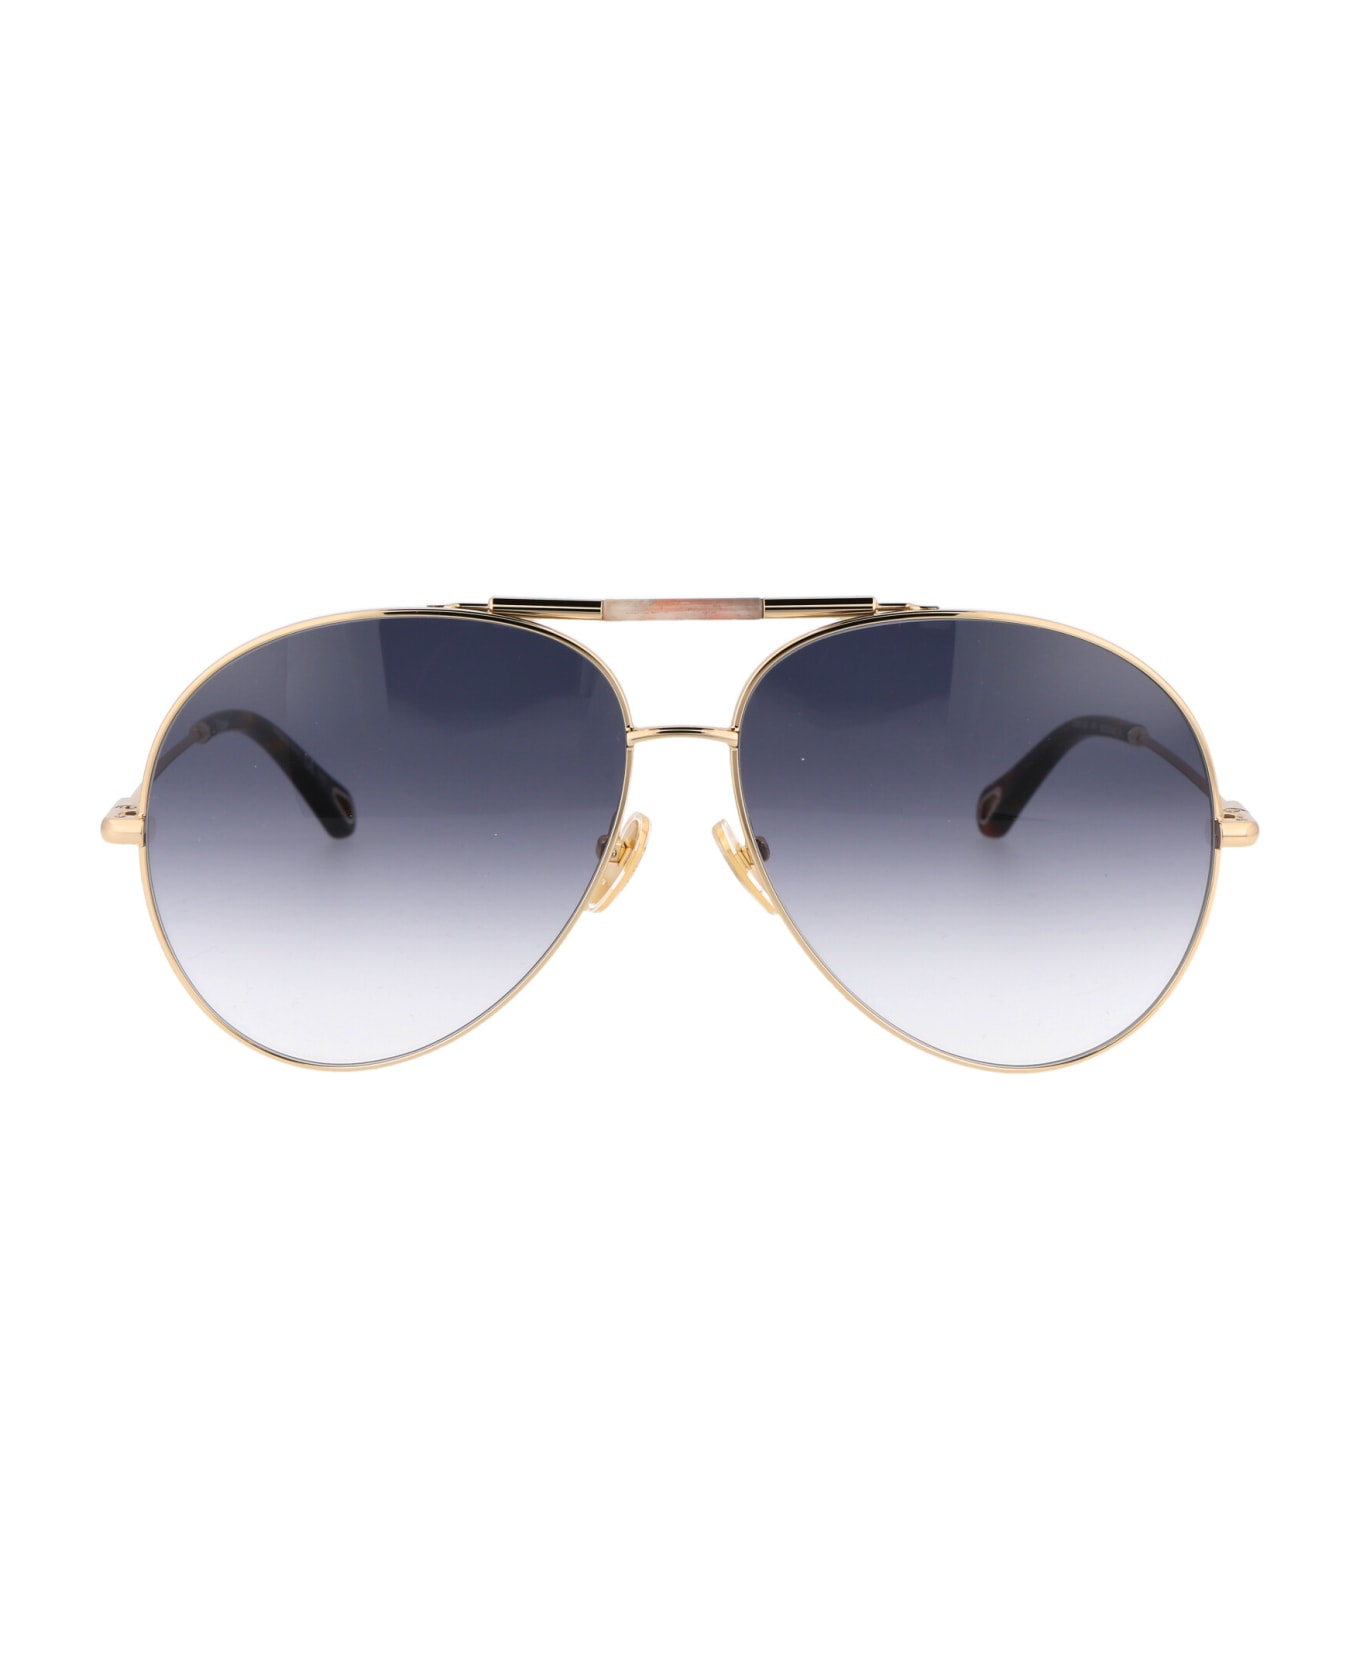 Chloé Eyewear Ch0113s Sunglasses - 001 GOLD GOLD BLUE